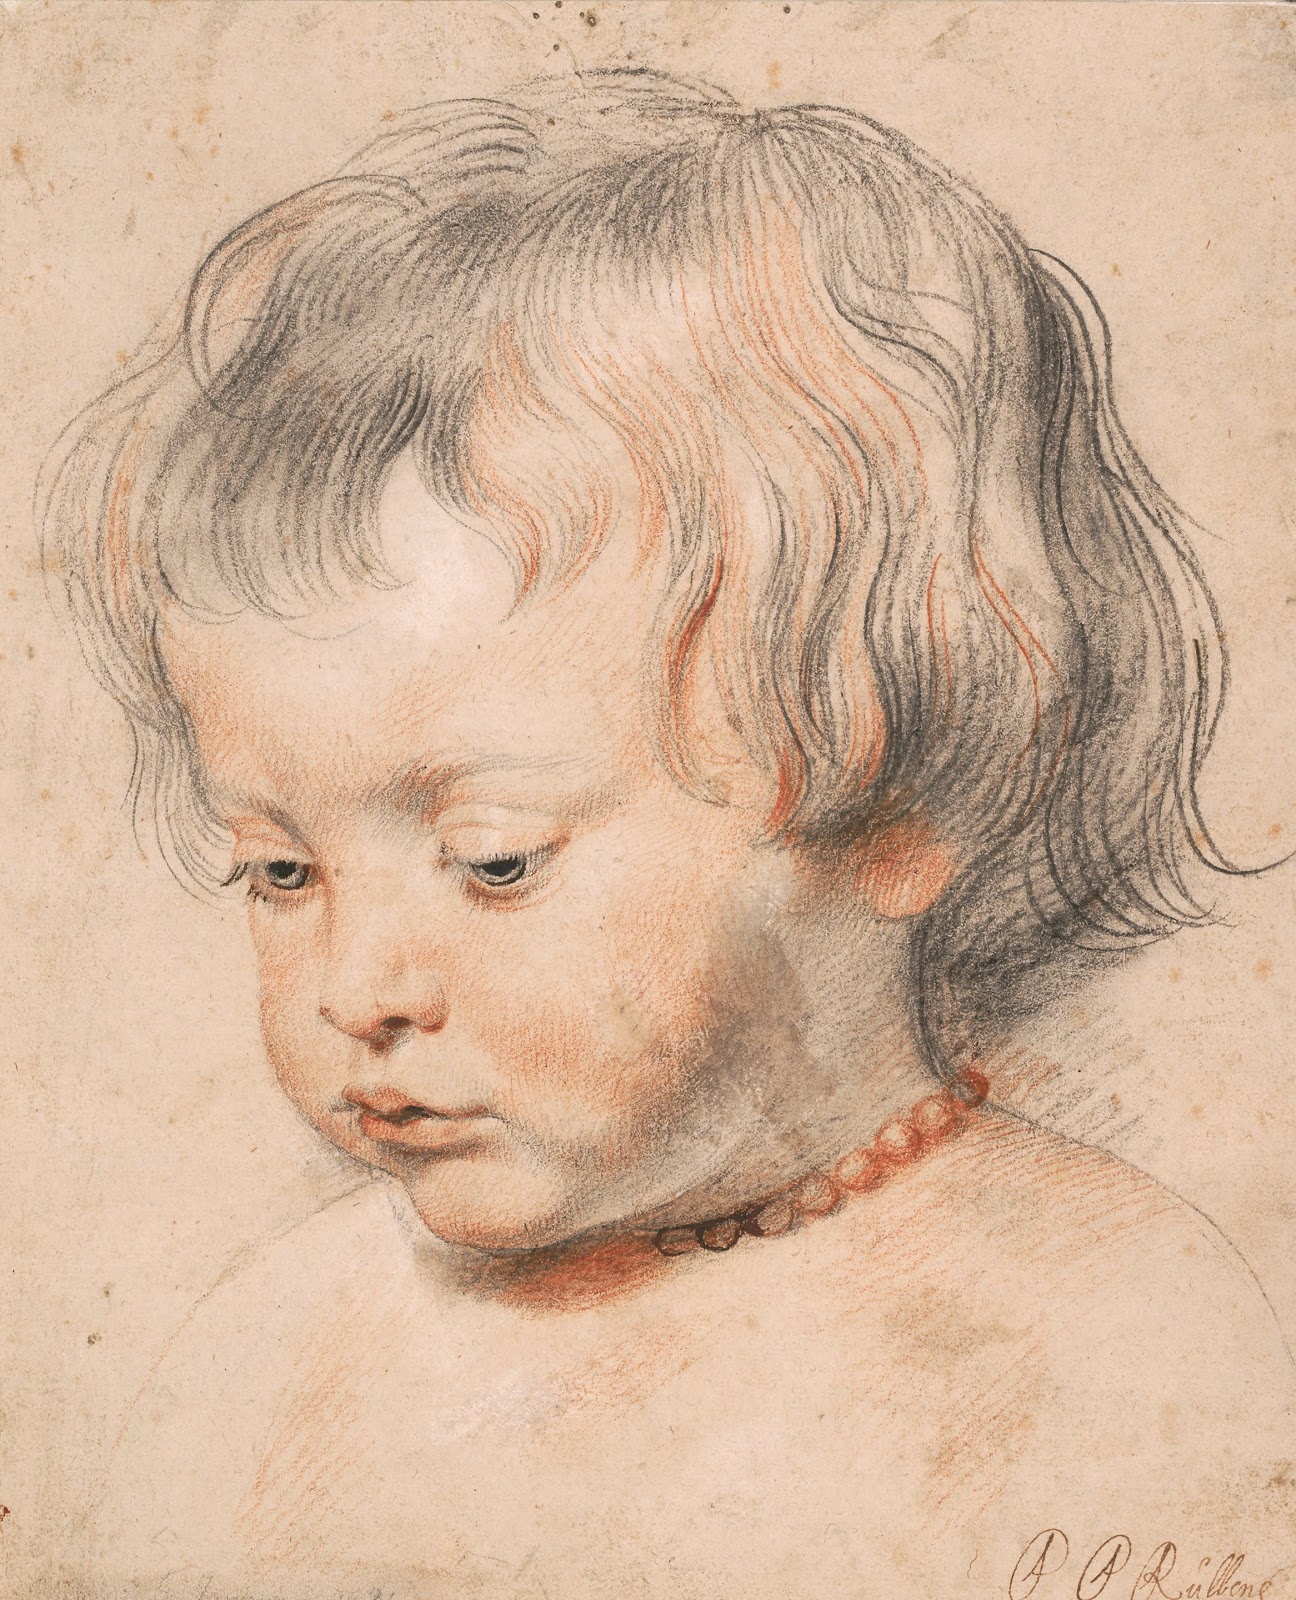 Peter+Paul+Rubens-1577-1640 (79).jpg